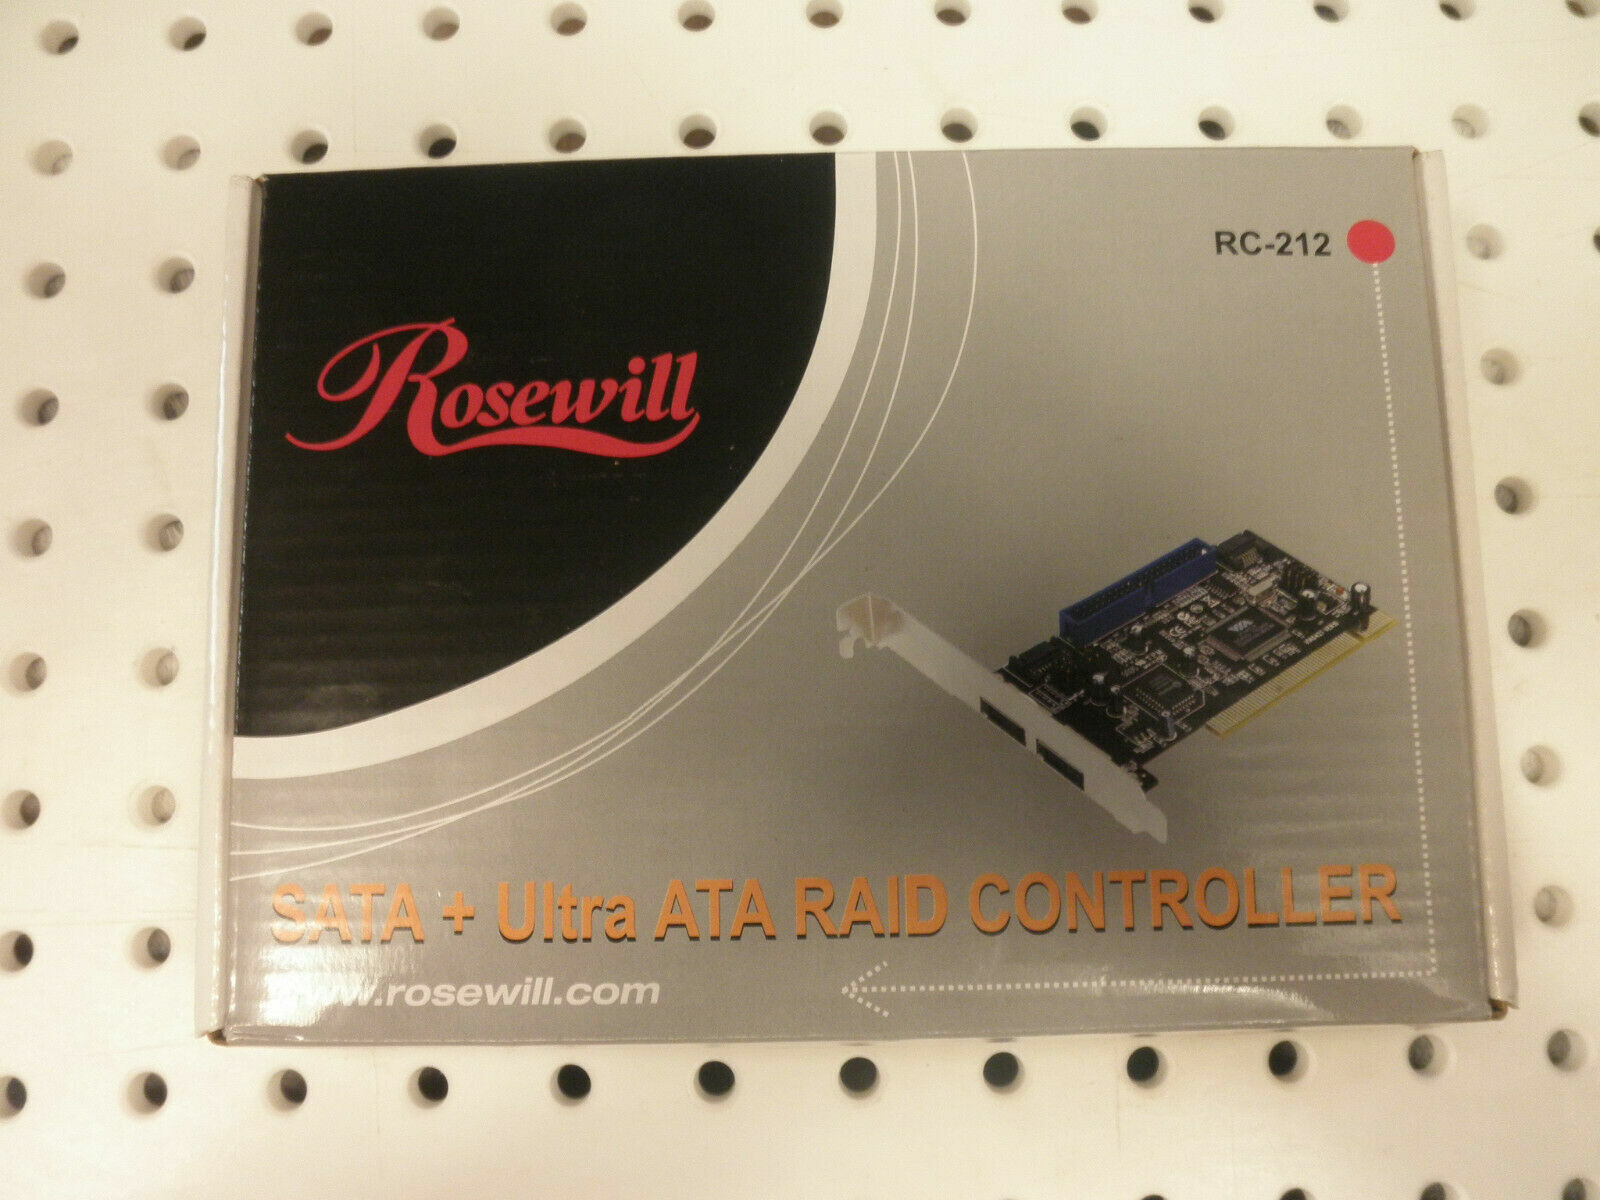 ROSEWILL SATA + ULTRA ATA RAID CONTROLLER RC-212